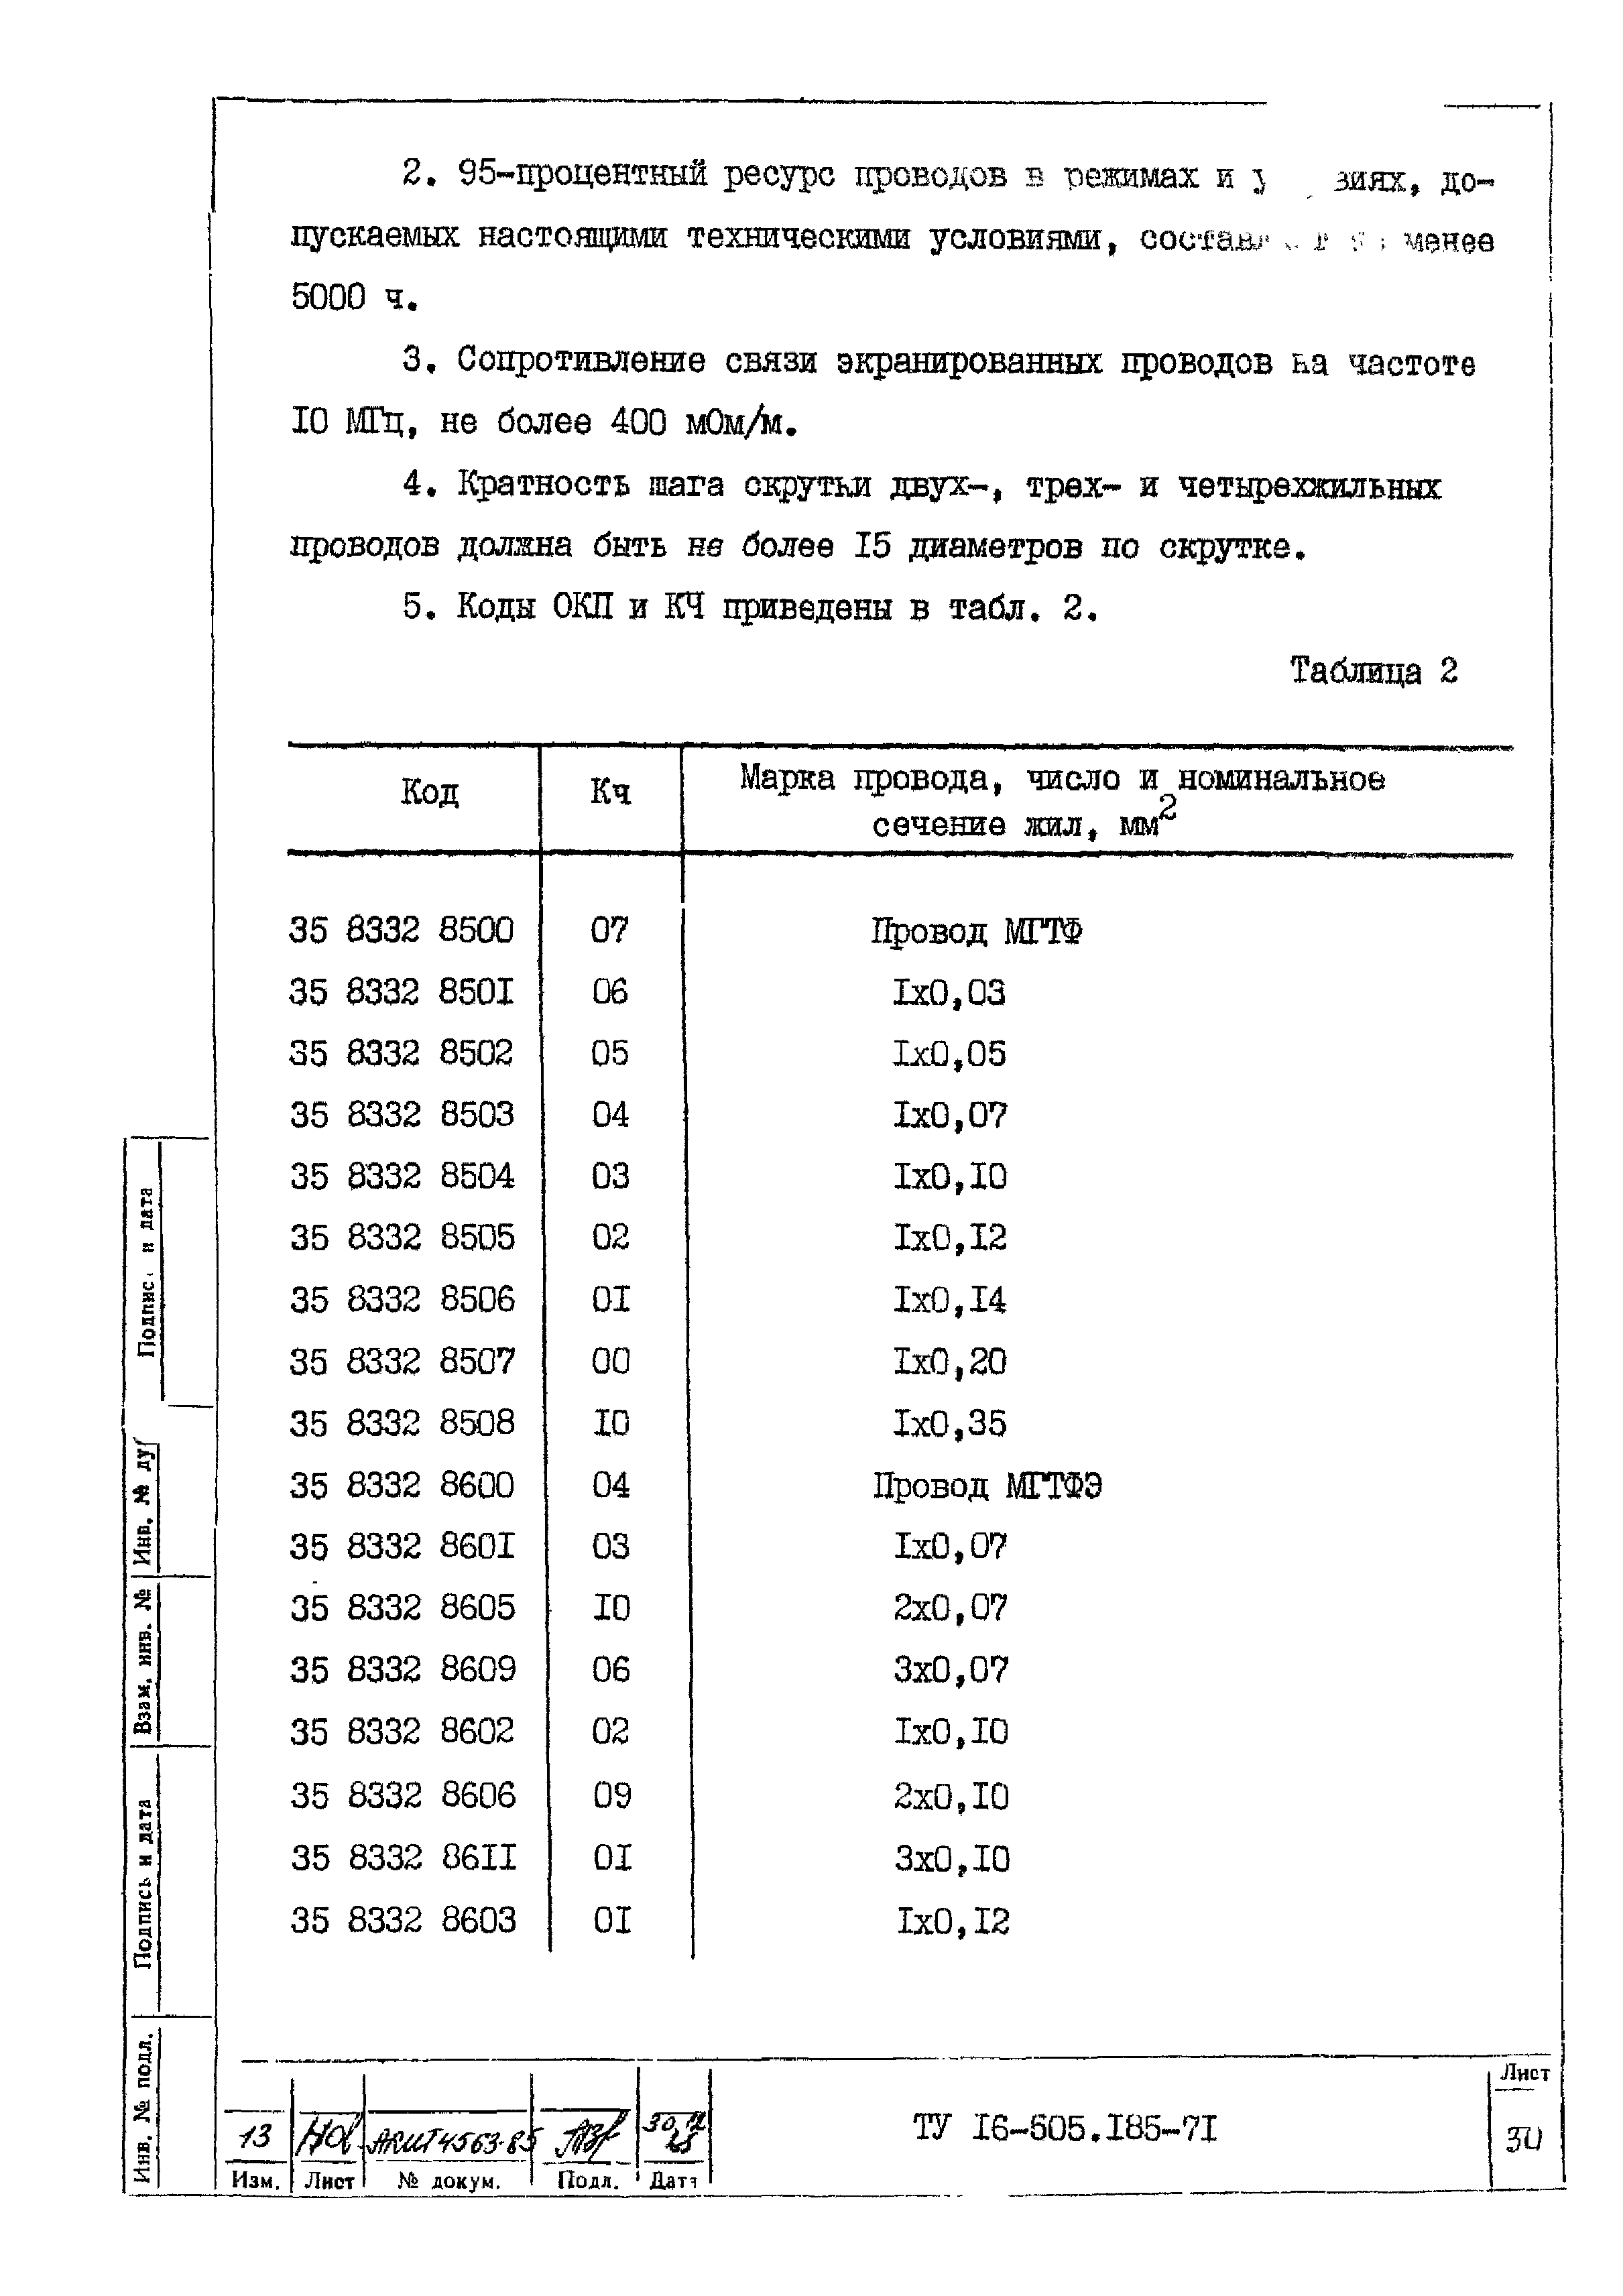 ТУ 16-505.185-71